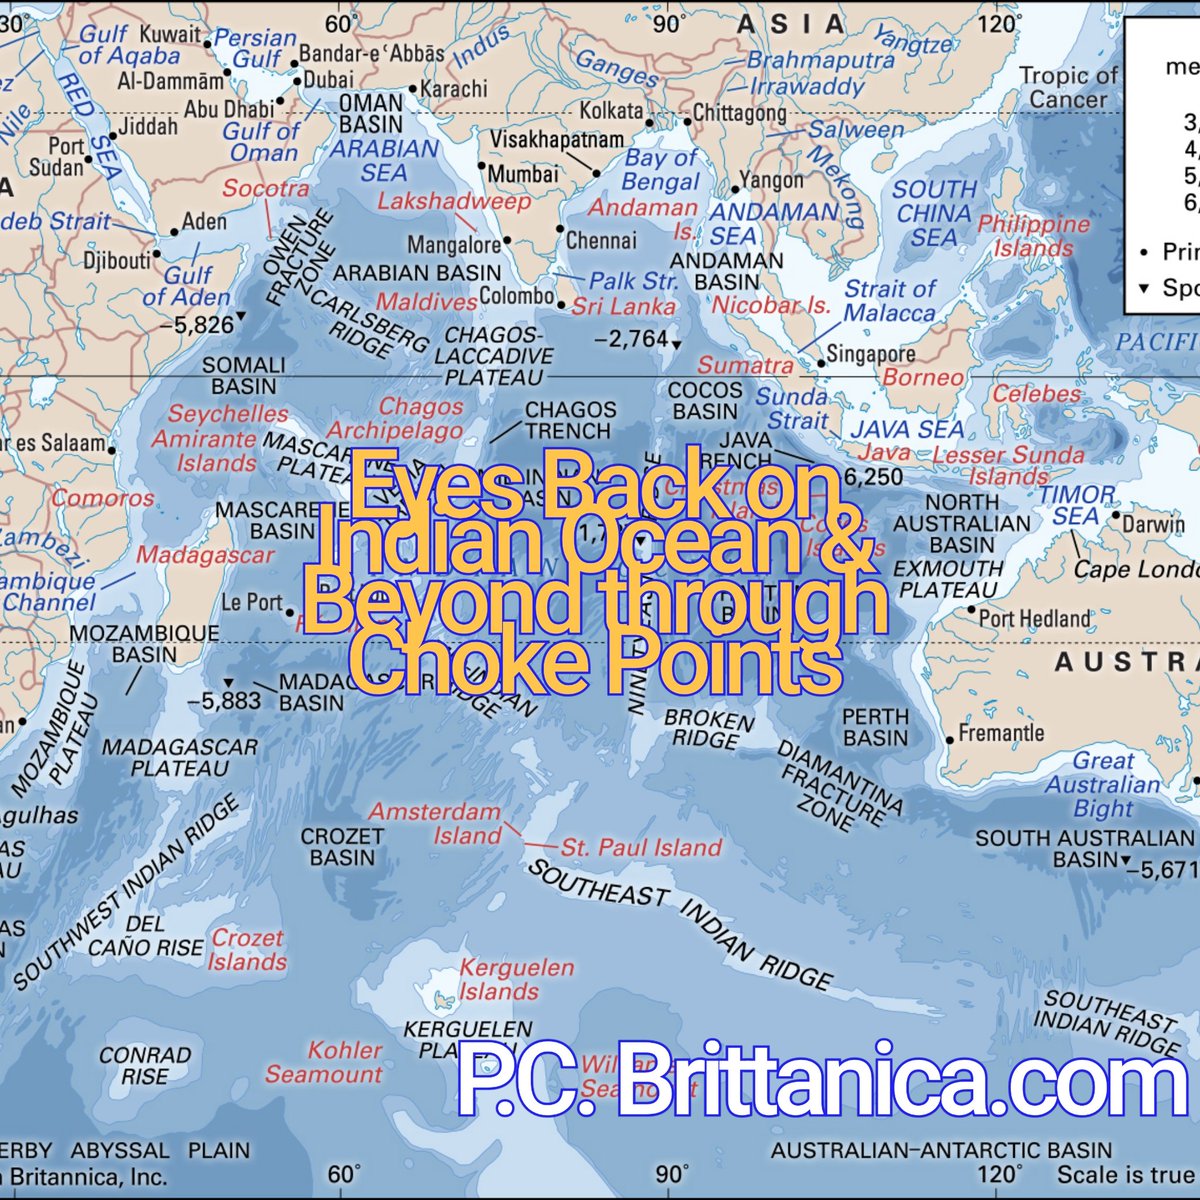 4 залива индийского океана. Индийский океан на карте. Моря индийского океана. Физическая карта индийского океана.